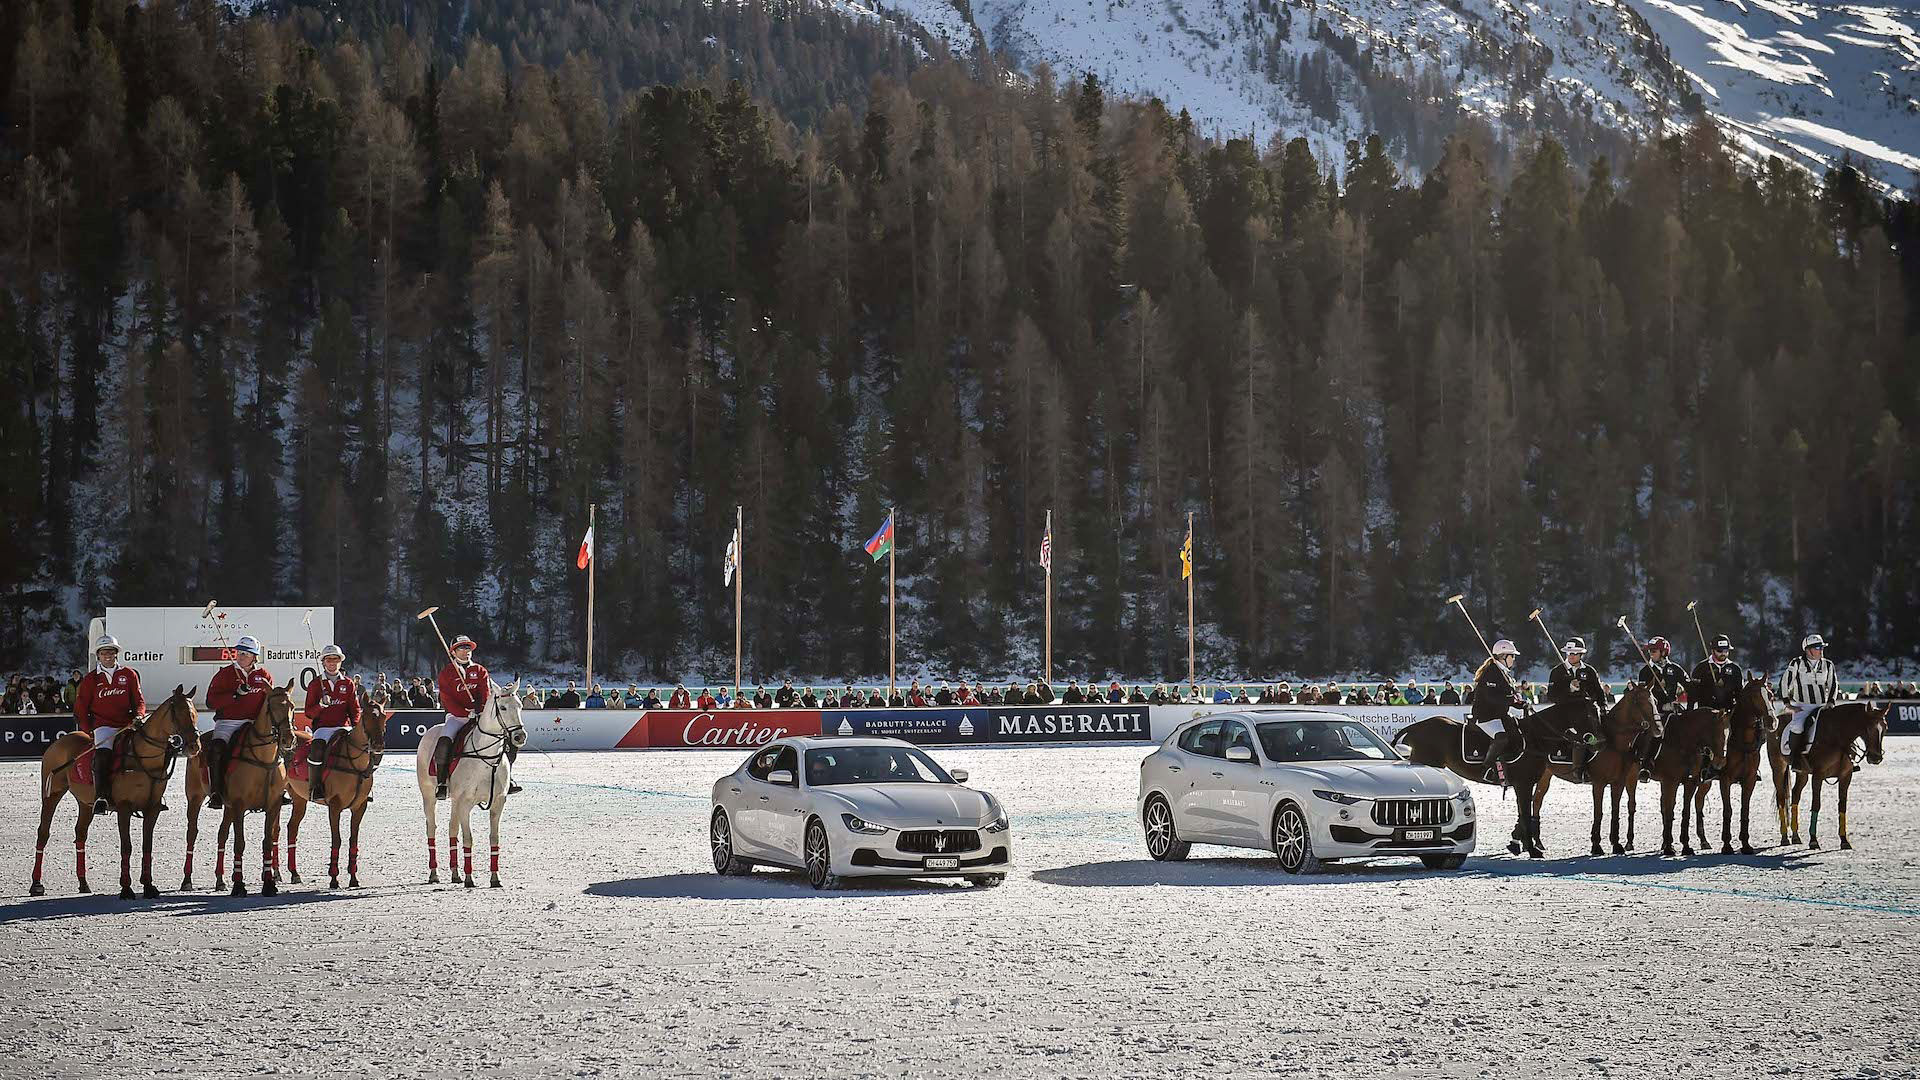 Maserati-Polo-Tour-2017---Snow-Polo-St-Moritz---Maserati-Car-Parade